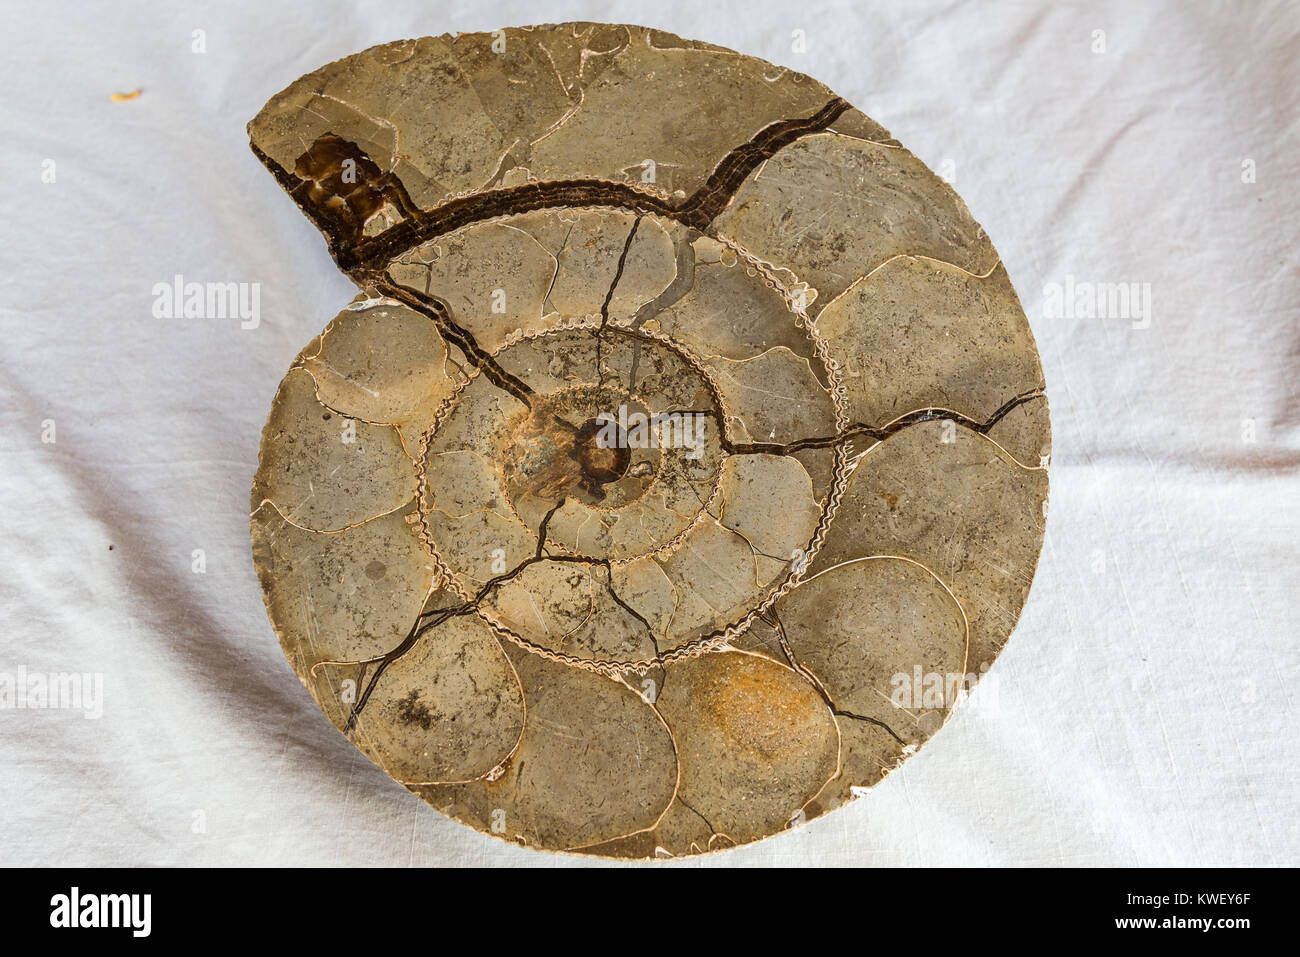 Ammonite fossil. Madagascar, Africa. Stock Photo